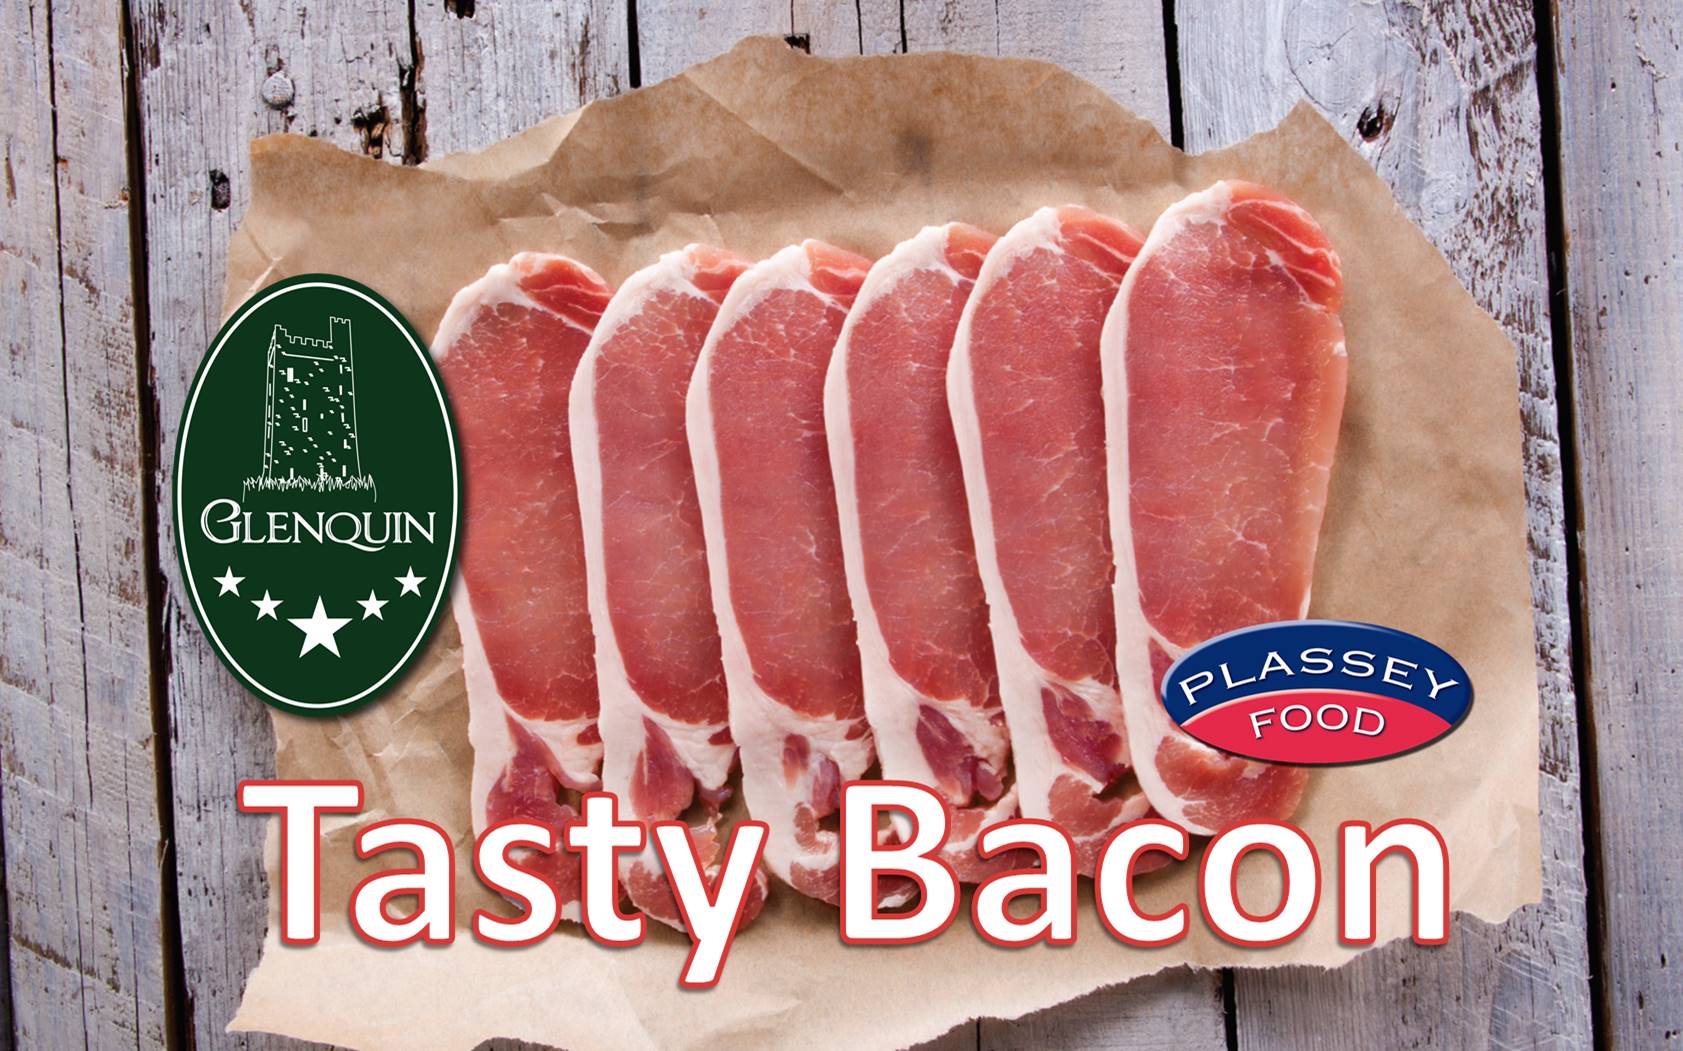 Glenquin bacon Plassey Food